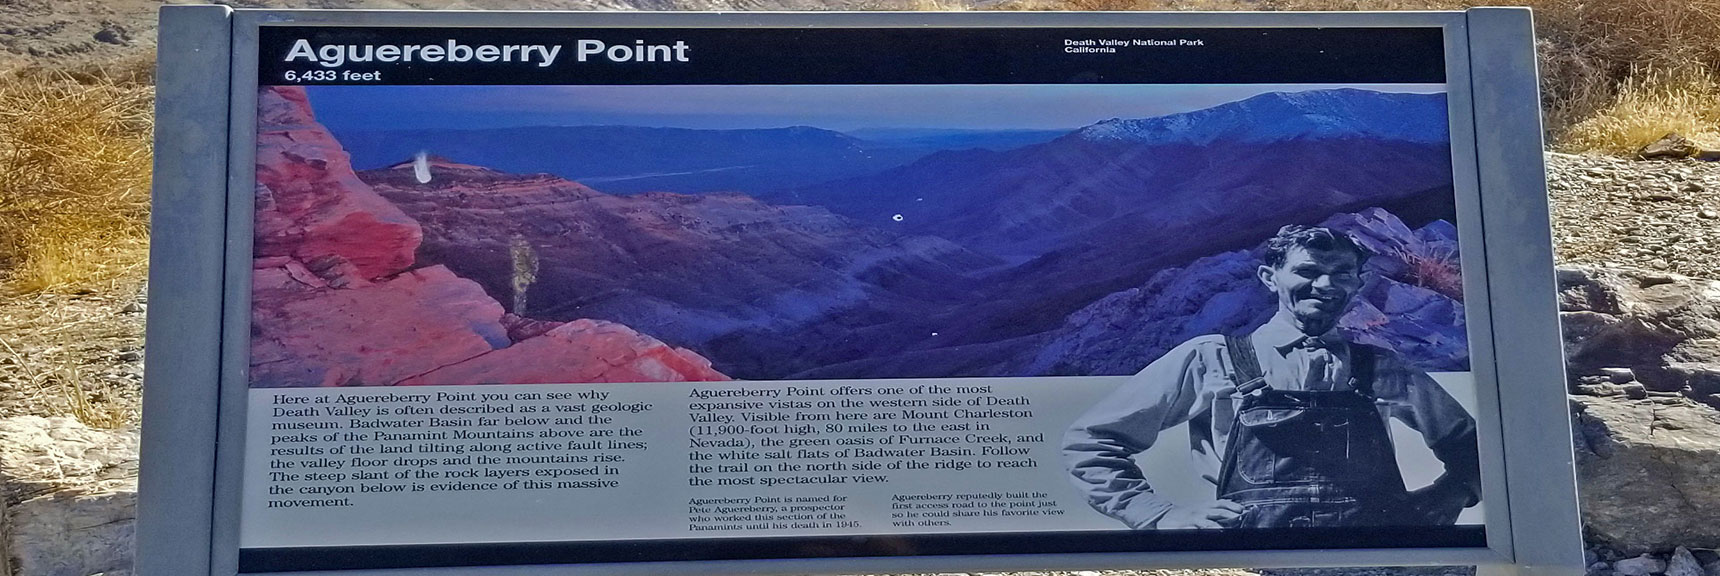 Interpretive Sign at Aguereberry Point | Aguereberry Point | Panamint Mountain Range | Death Valley National Park, California